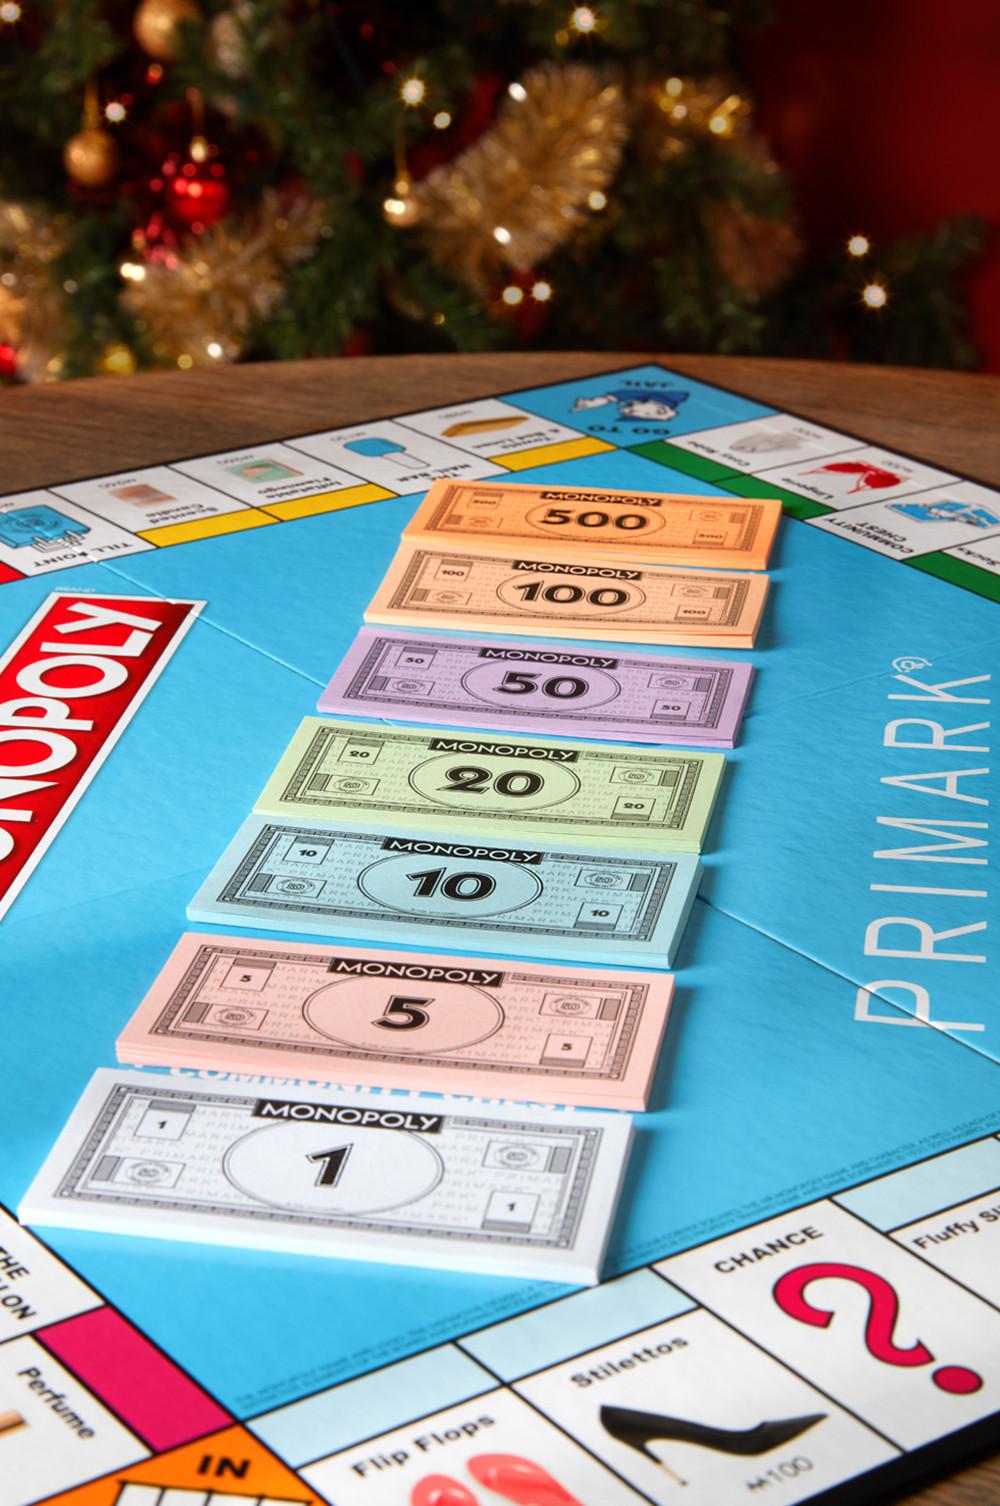 Primark monopoly board